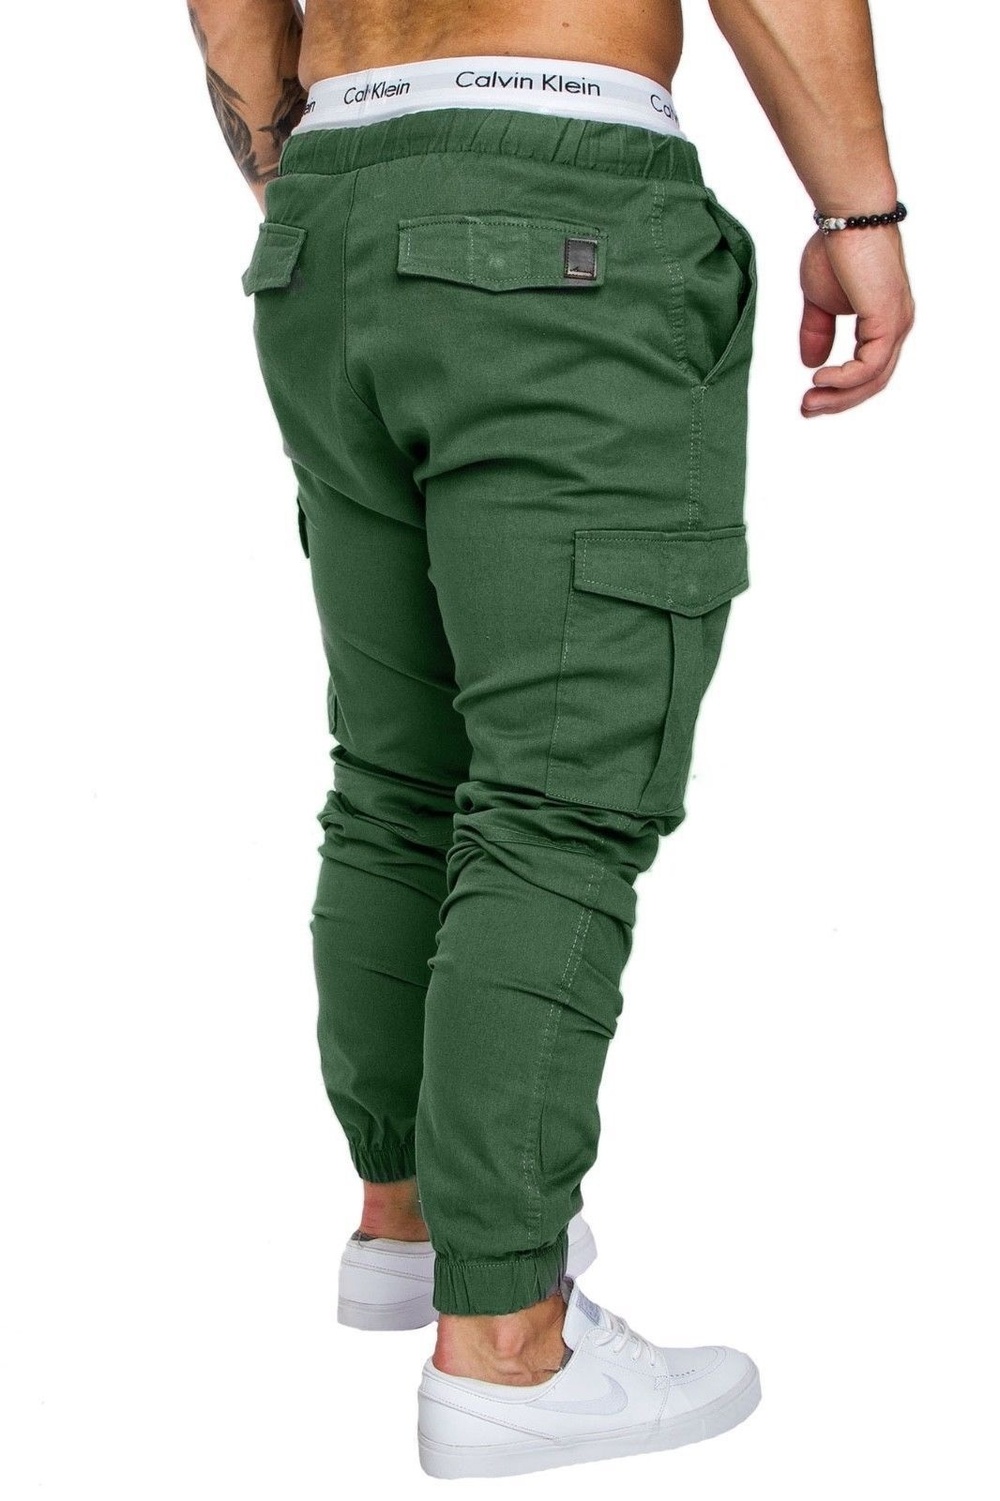 2020 Men's Fashion Pants Drawstring Outdoor Male Casual Multi-pocket Cargo Pants Trousers Plus Size 12 Colors